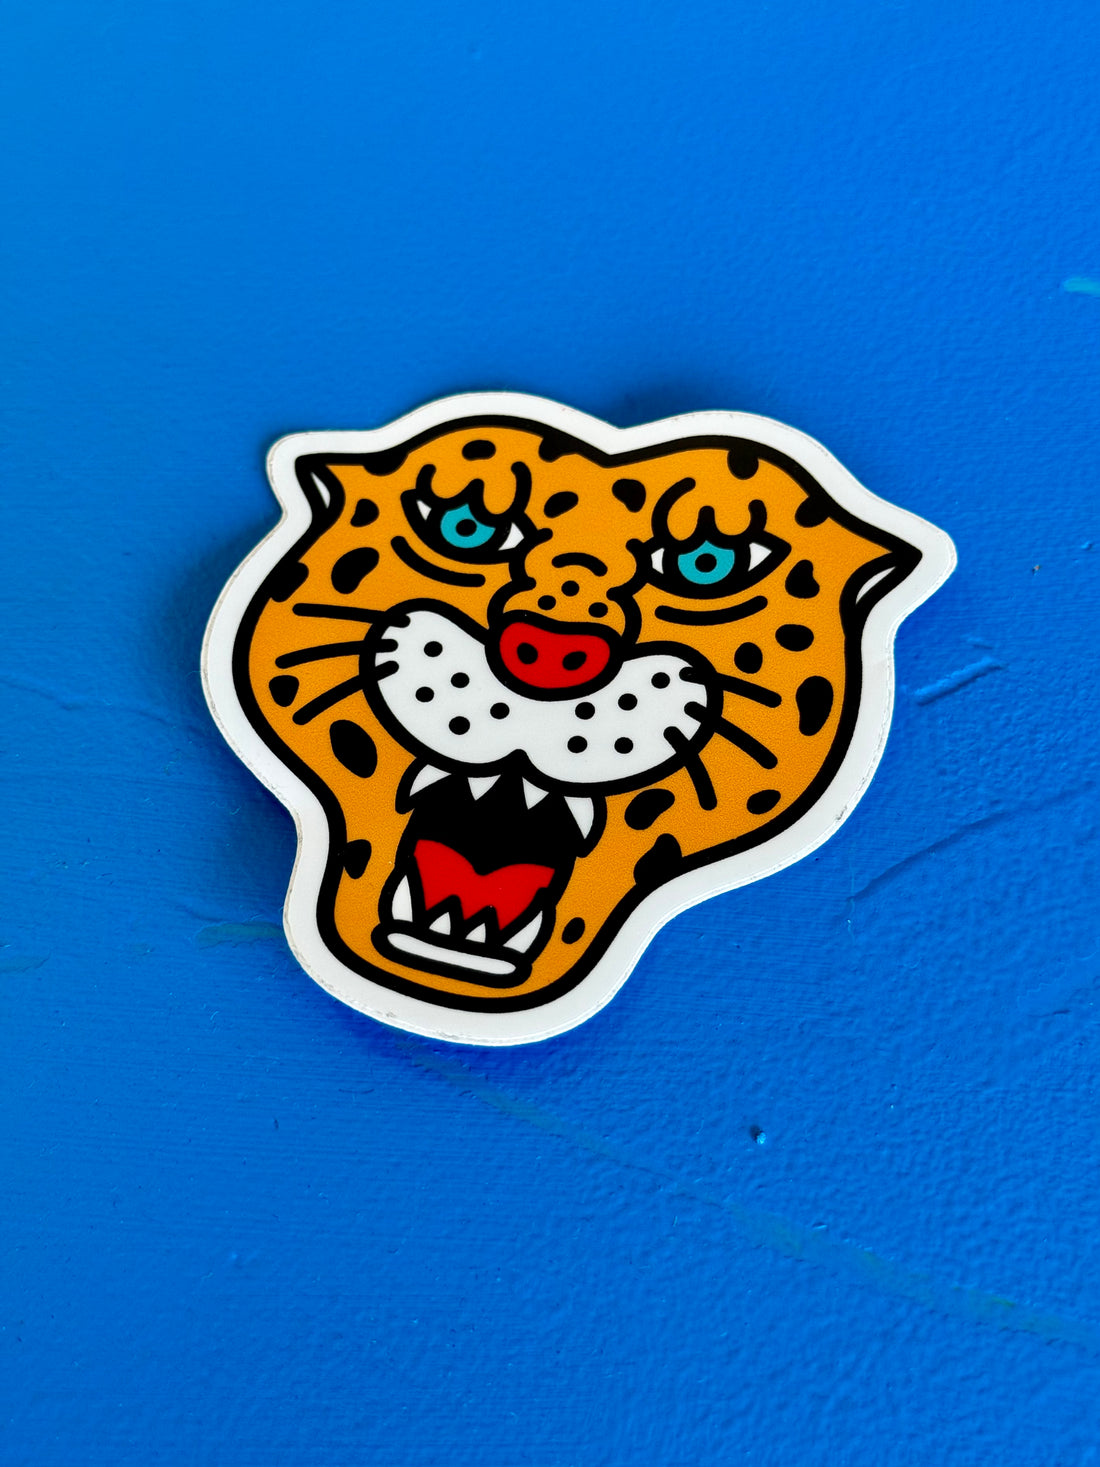 Jaguar Sticker